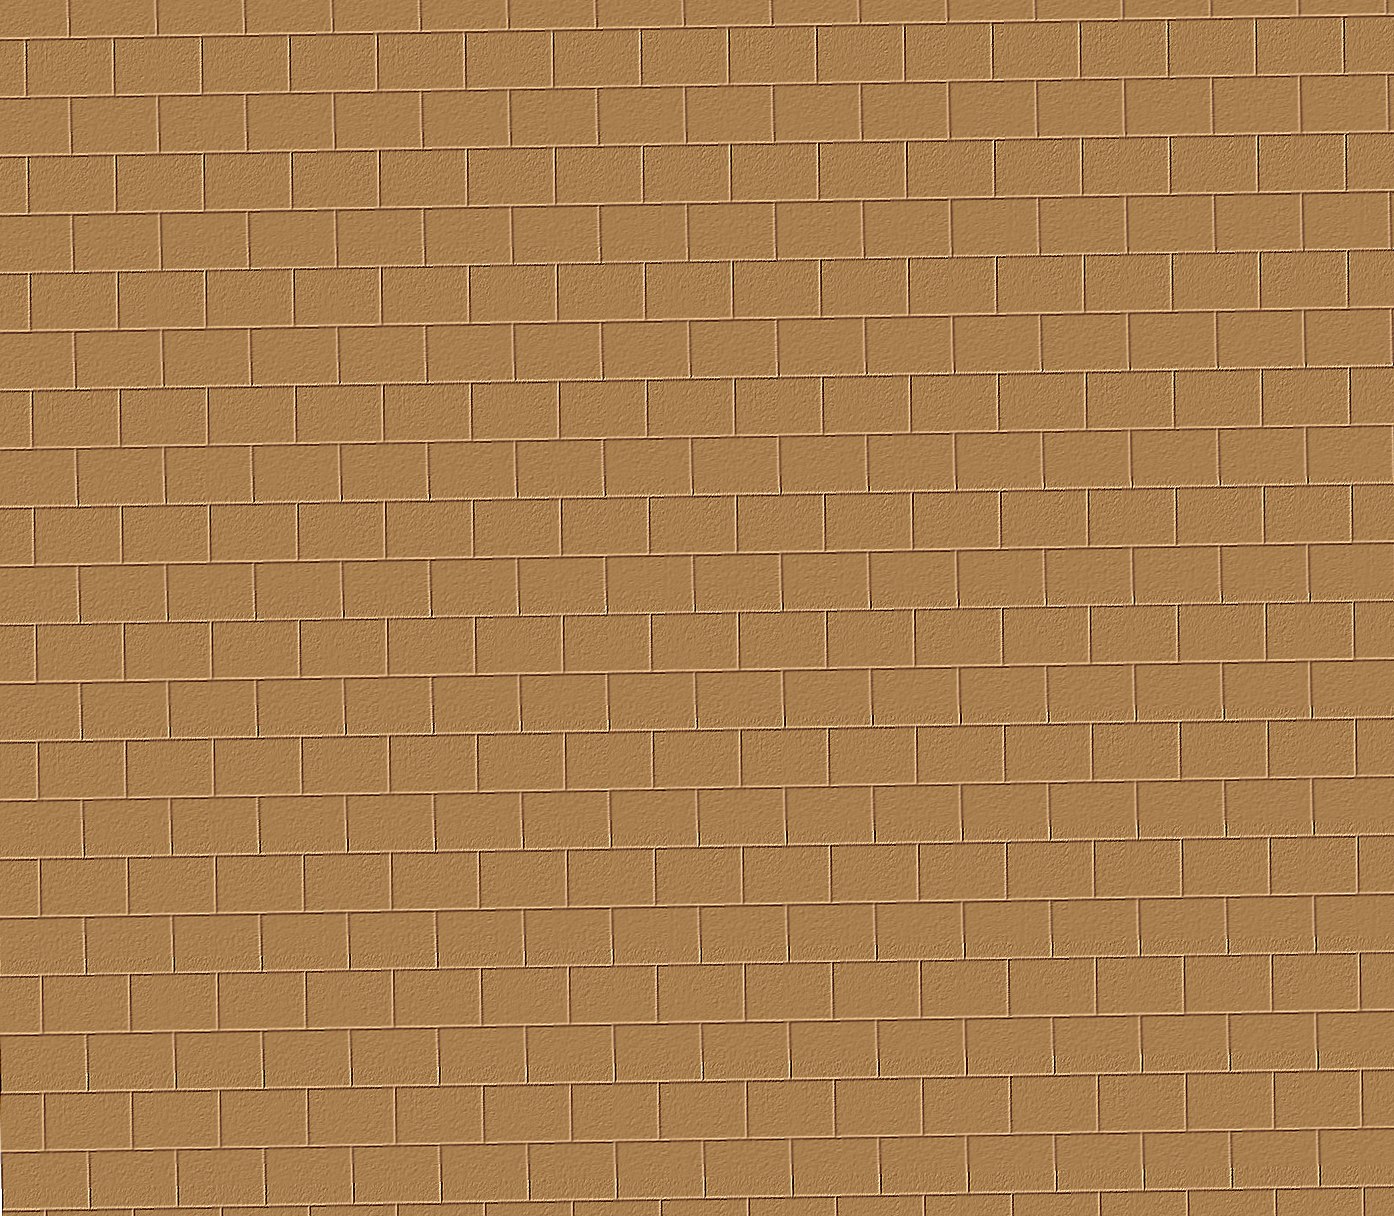 iPhone Bricks 1 at 2048 x 2048 iPad size wallpapers HD quality